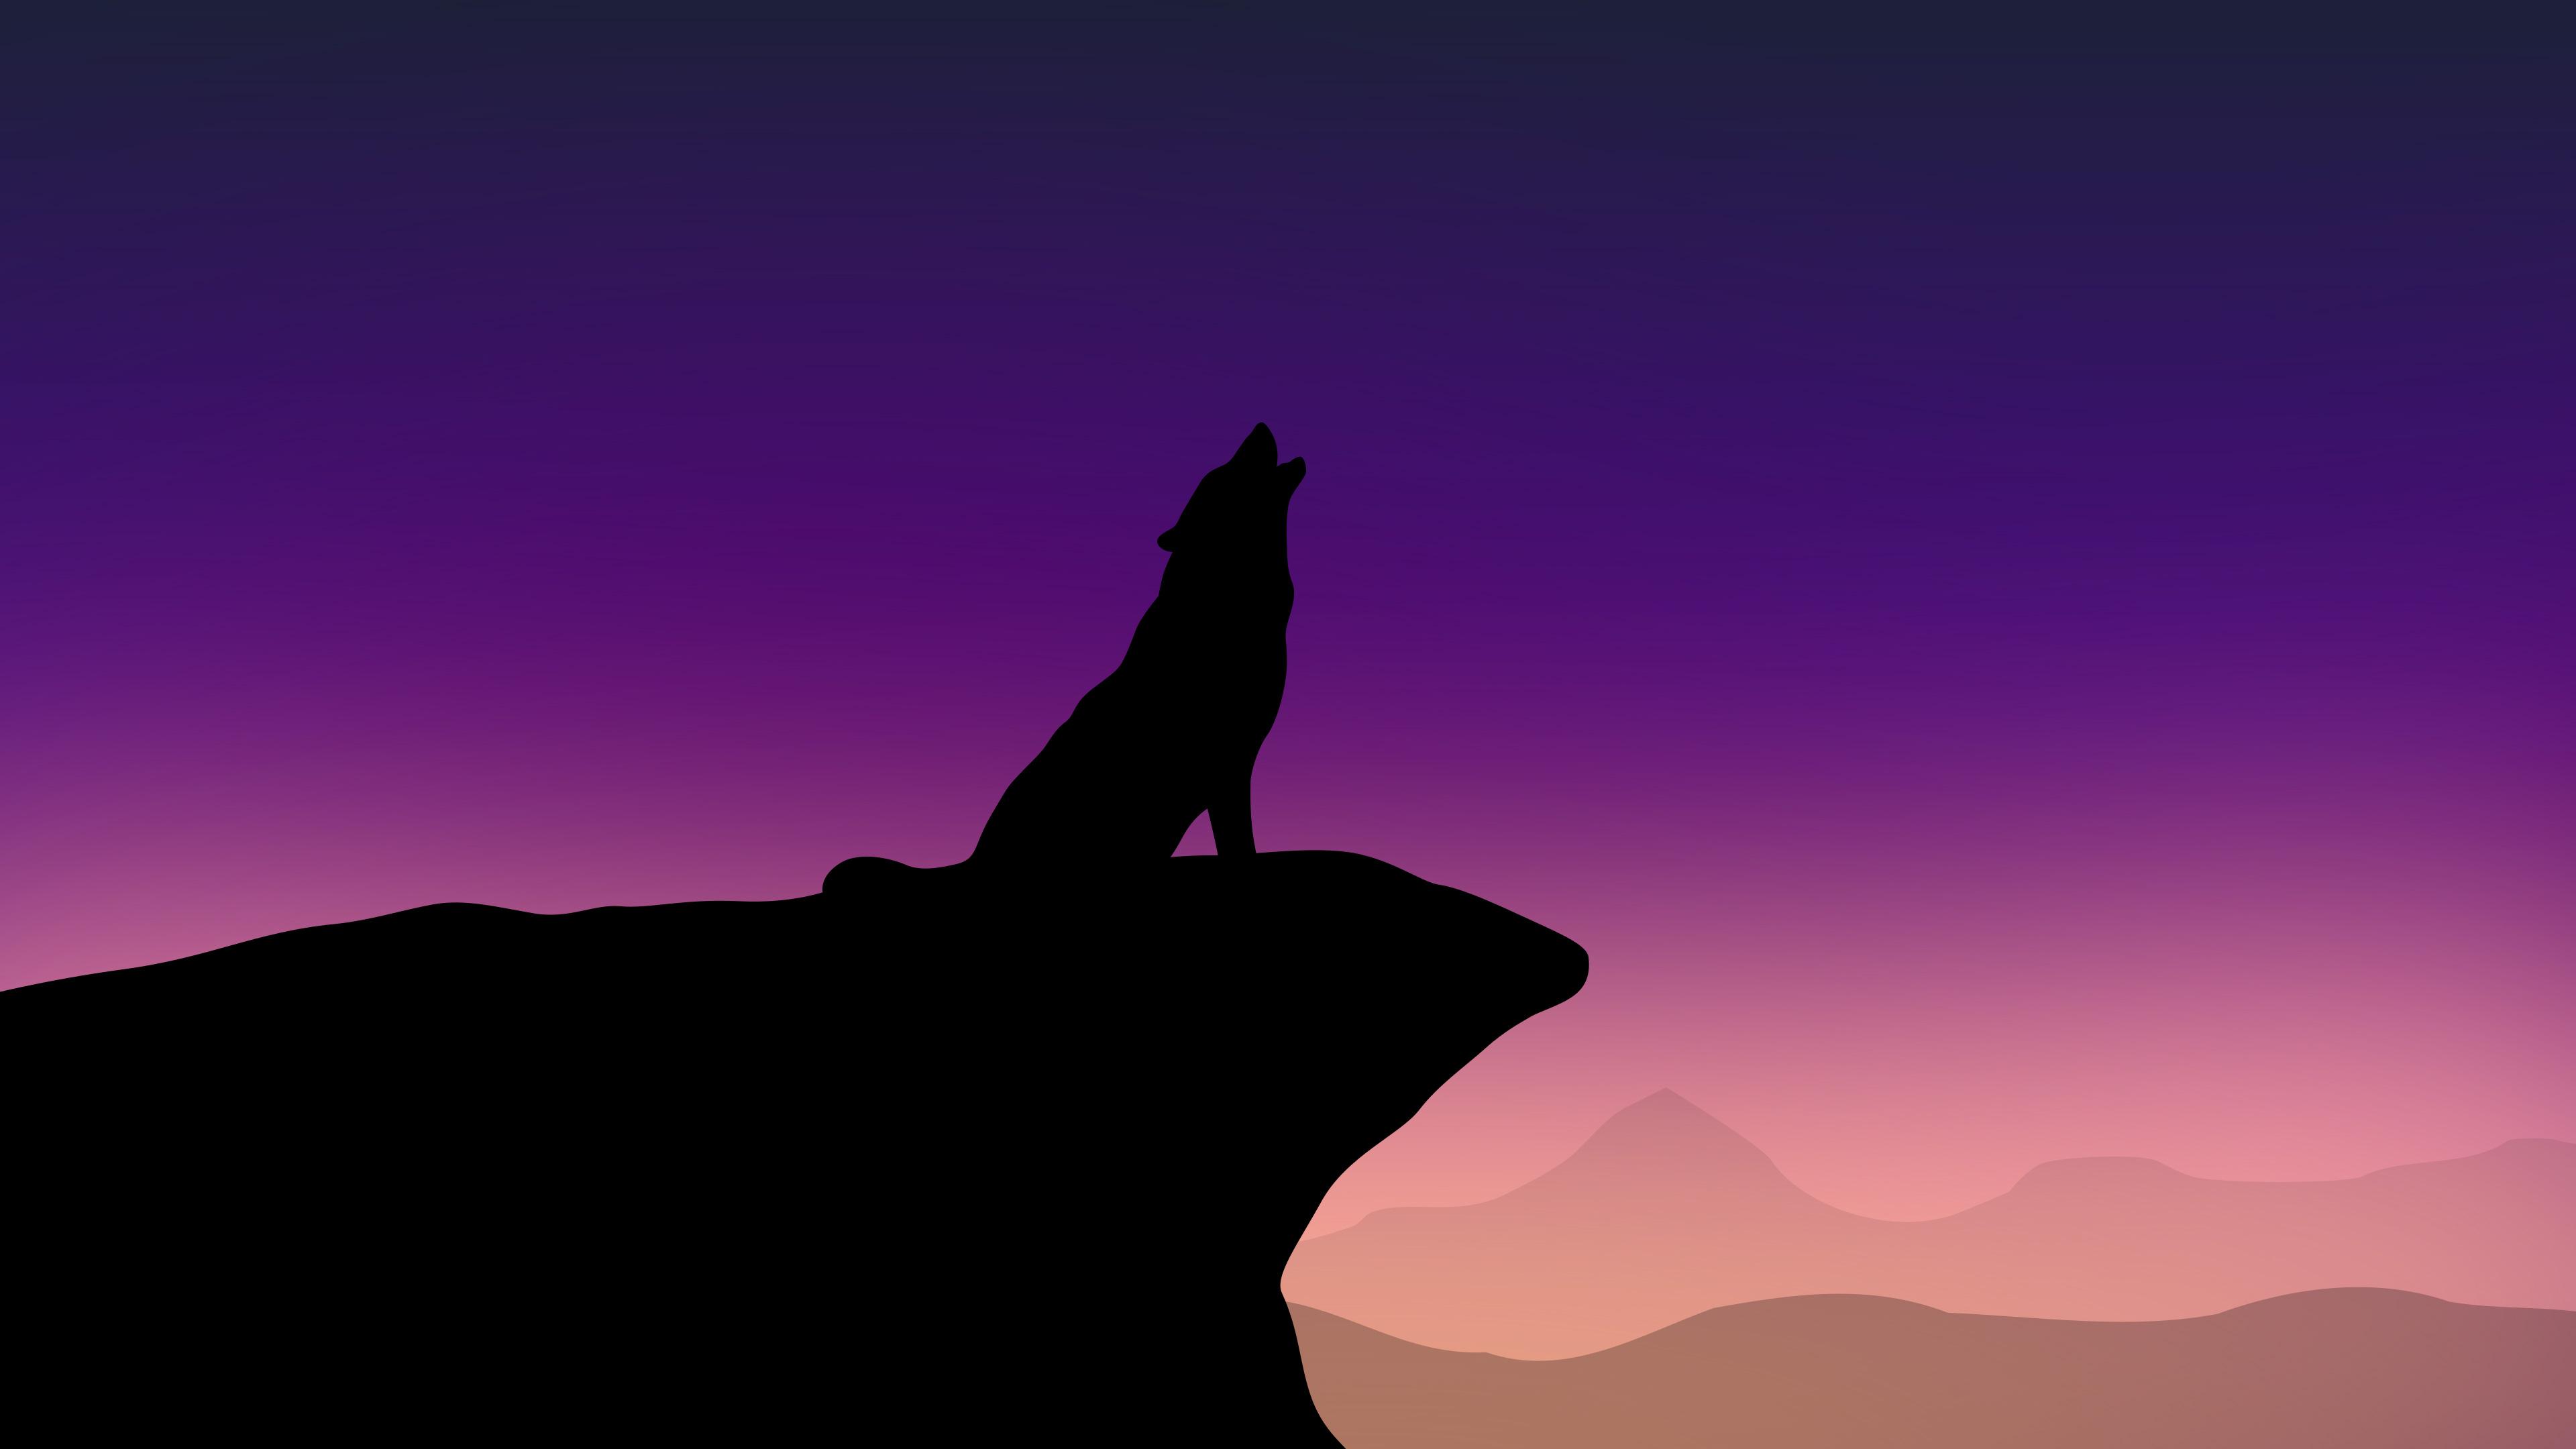 Howling Wolf Minimalism 4k, HD Artist, 4k Wallpaper, Image